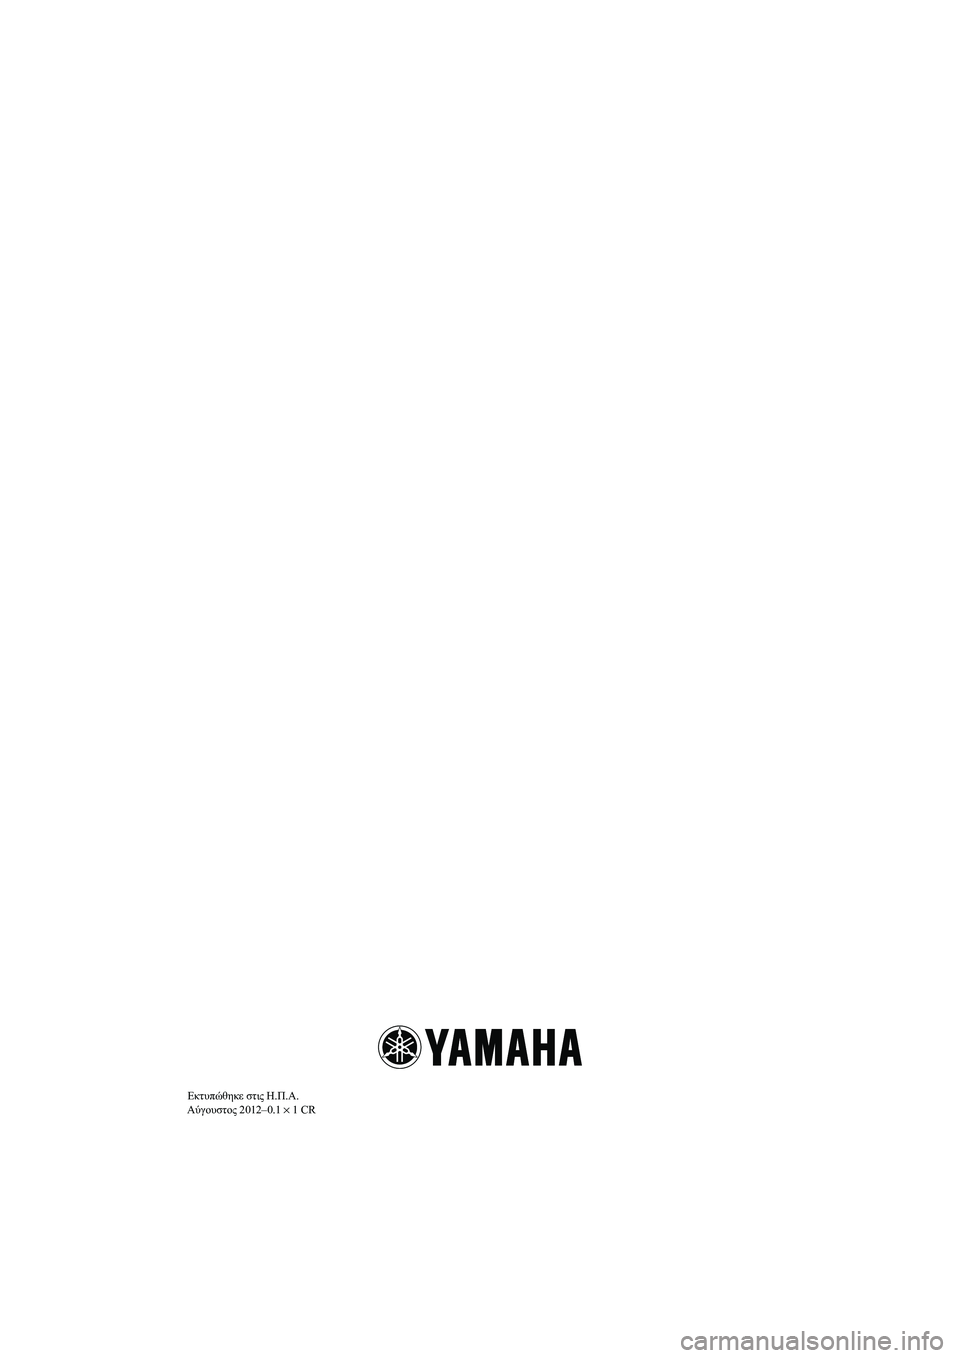 YAMAHA FZS 2013  ΟΔΗΓΌΣ ΧΡΉΣΗΣ (in Greek) Εκτυπώθηκε στις  Η .Π .A.
Αύγουστος  2012–0.1 ×  1 CR
UF2C74R0.book  Page 1  Tuesday, July 31, 2012  9:39 AM 